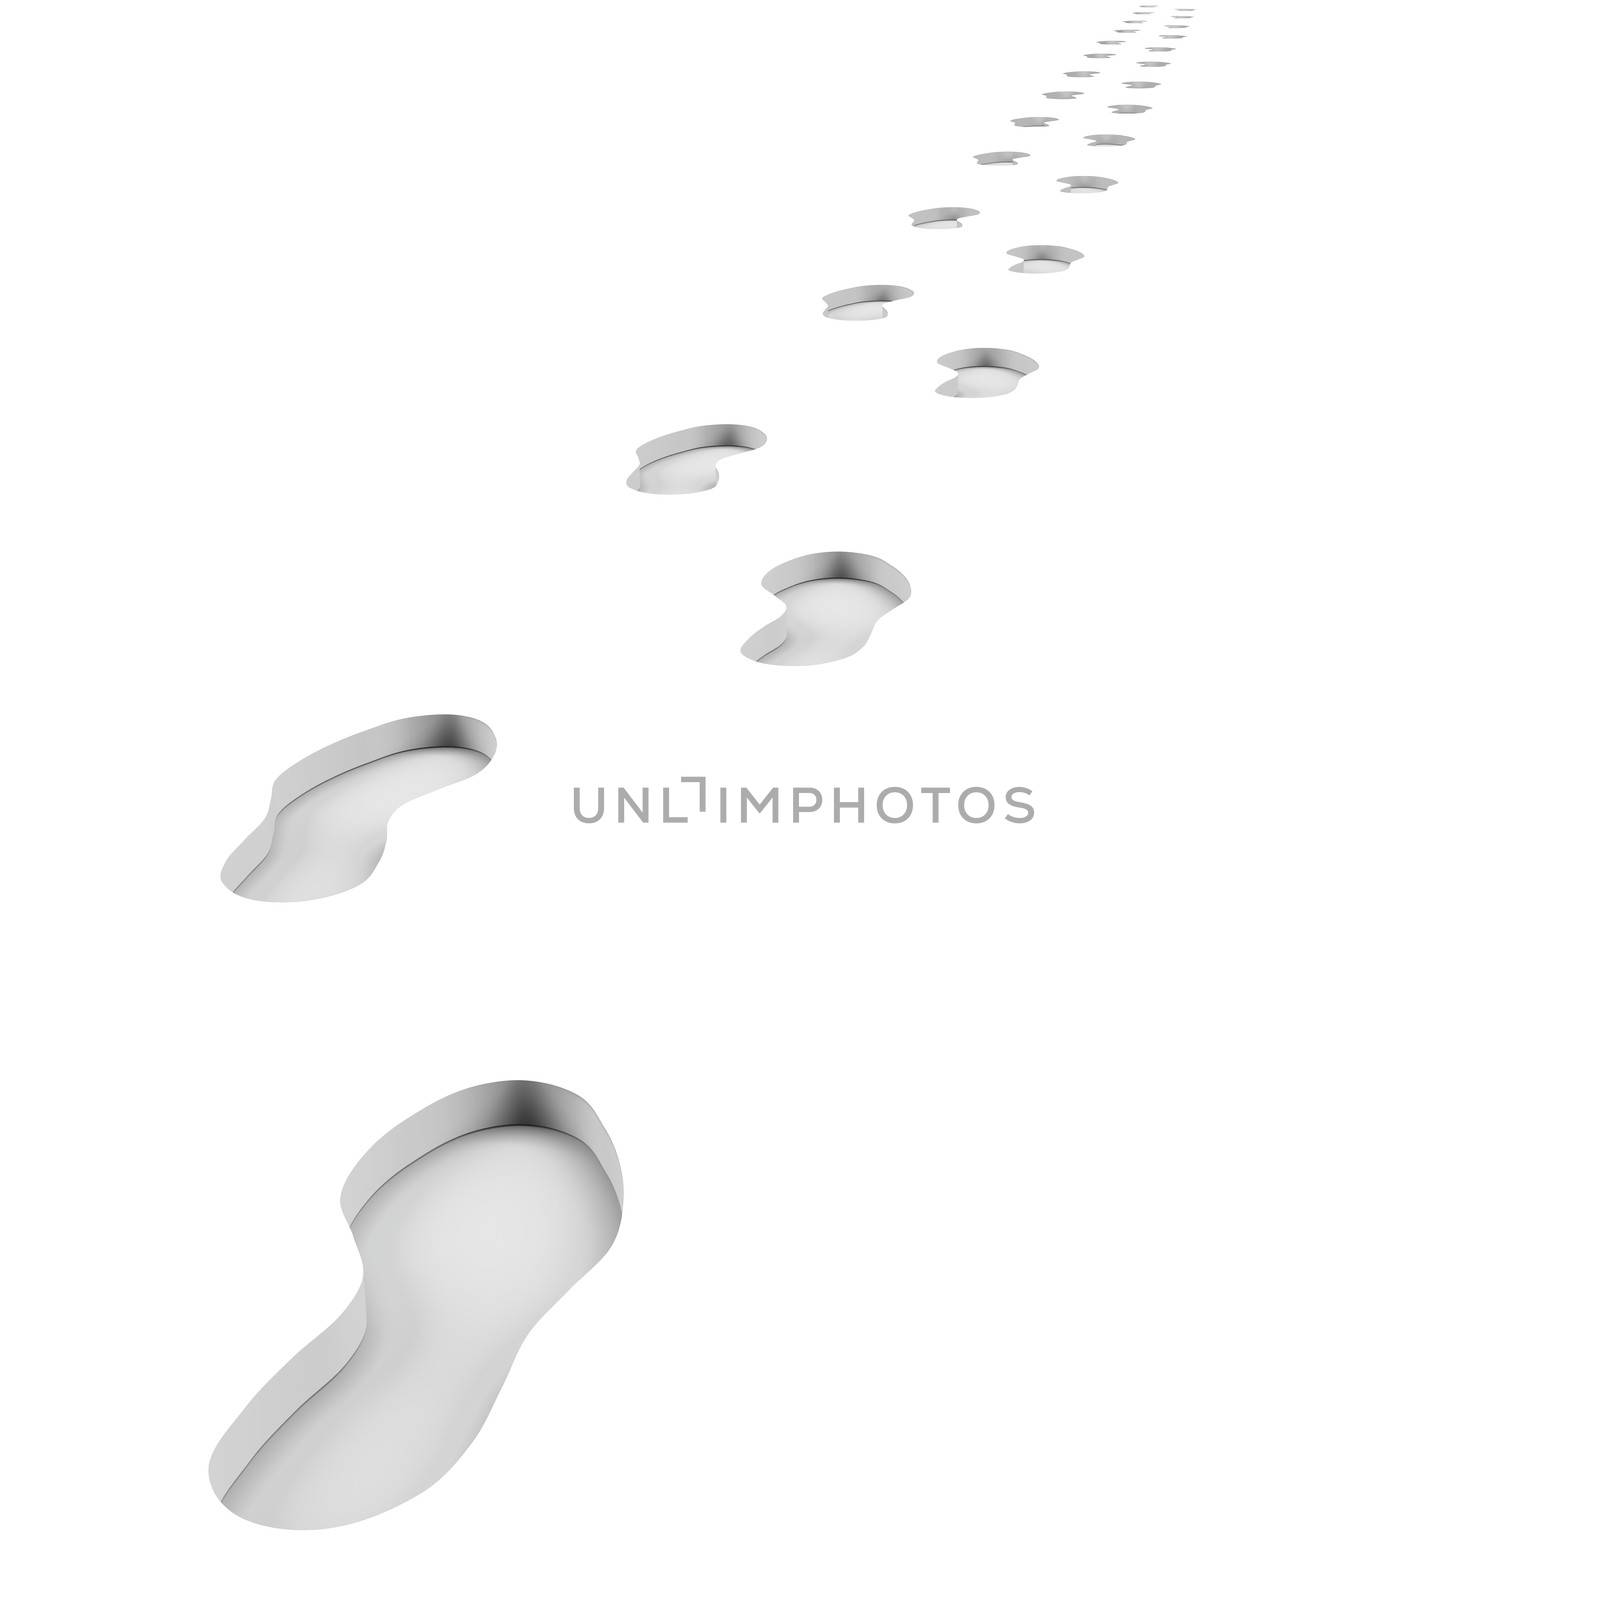 Footprints Path by make